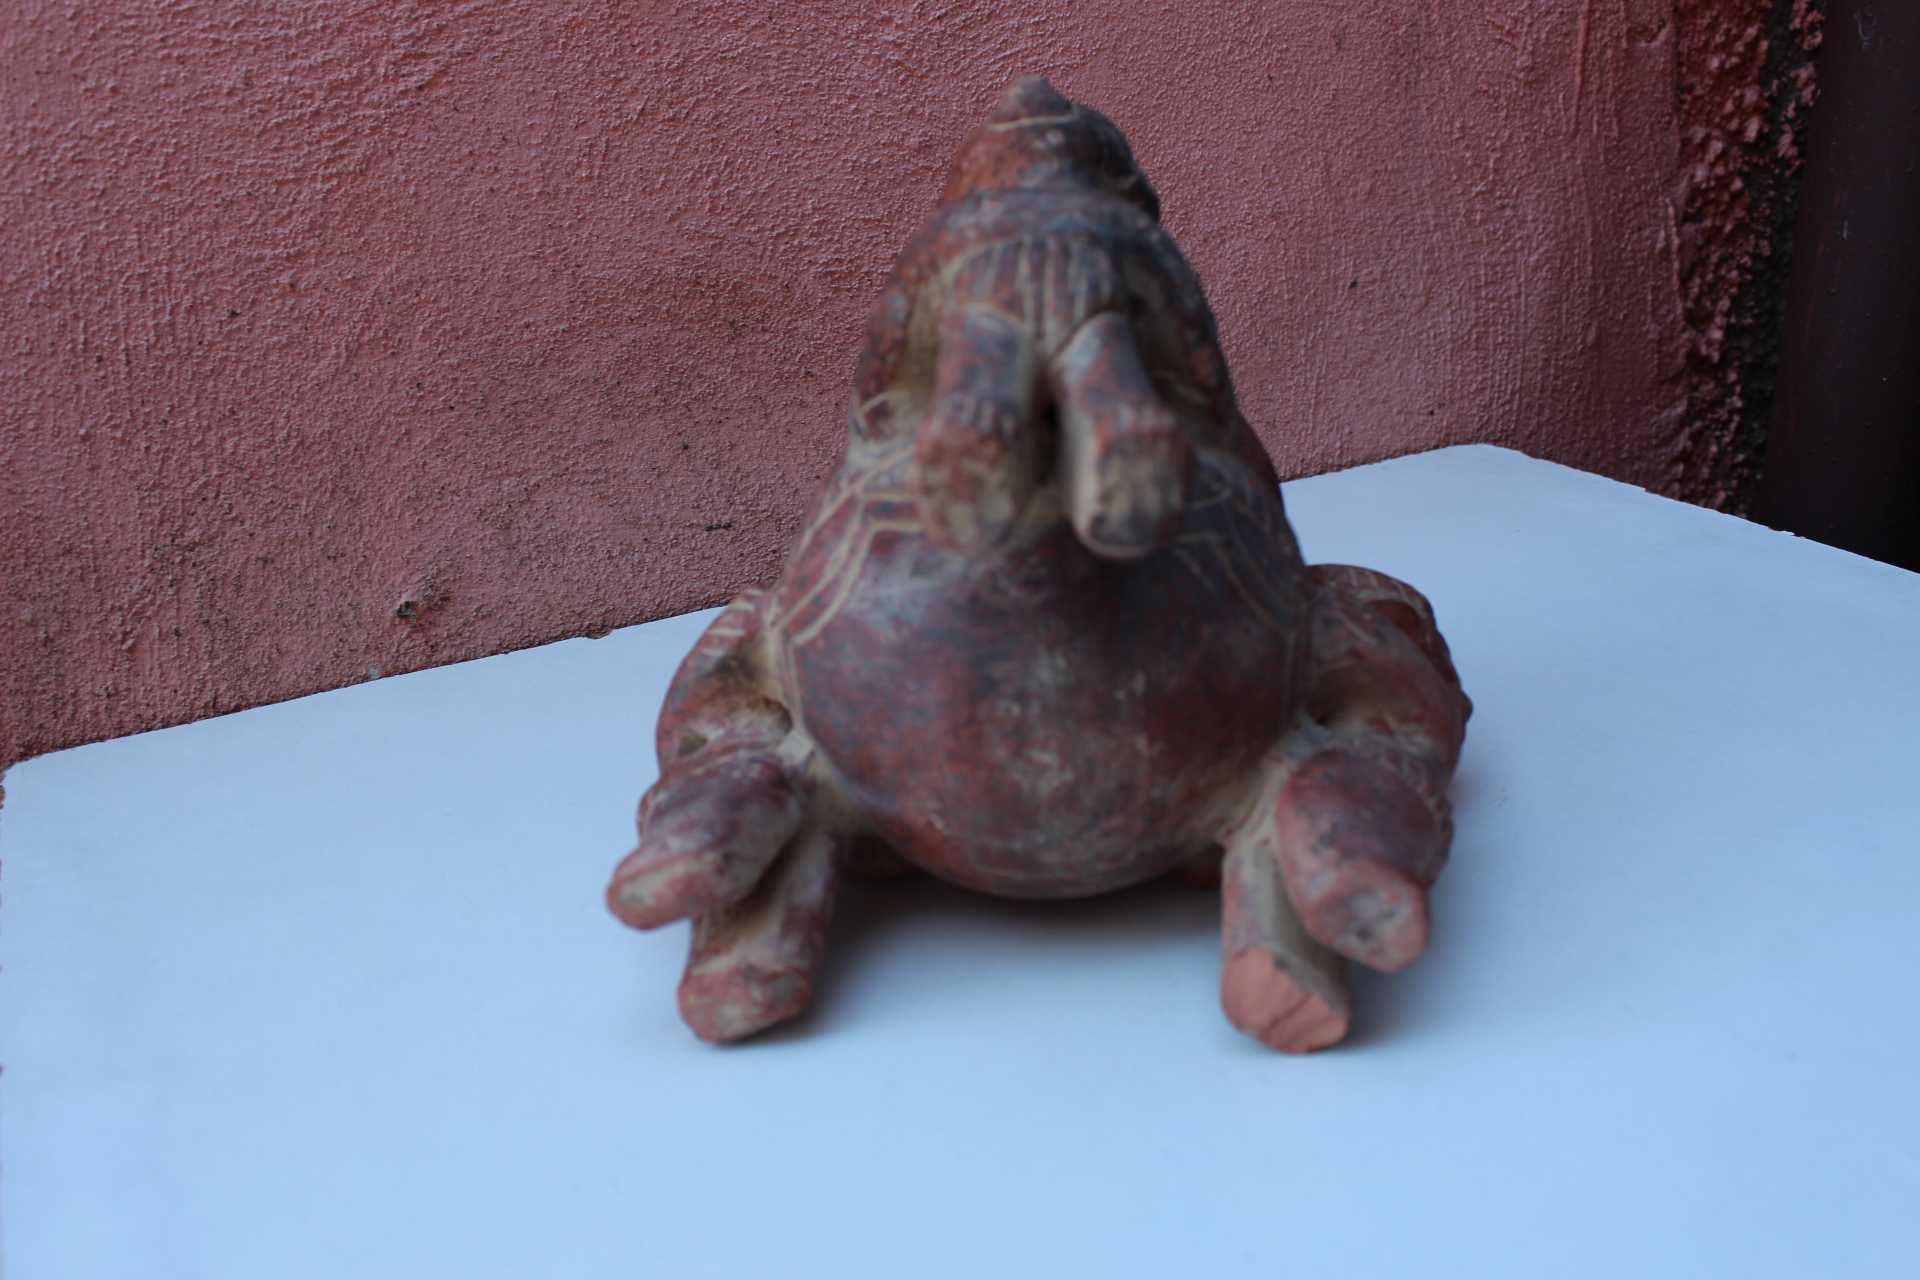 Bol ceramic AZTEC, MEXICO, arta traditionala